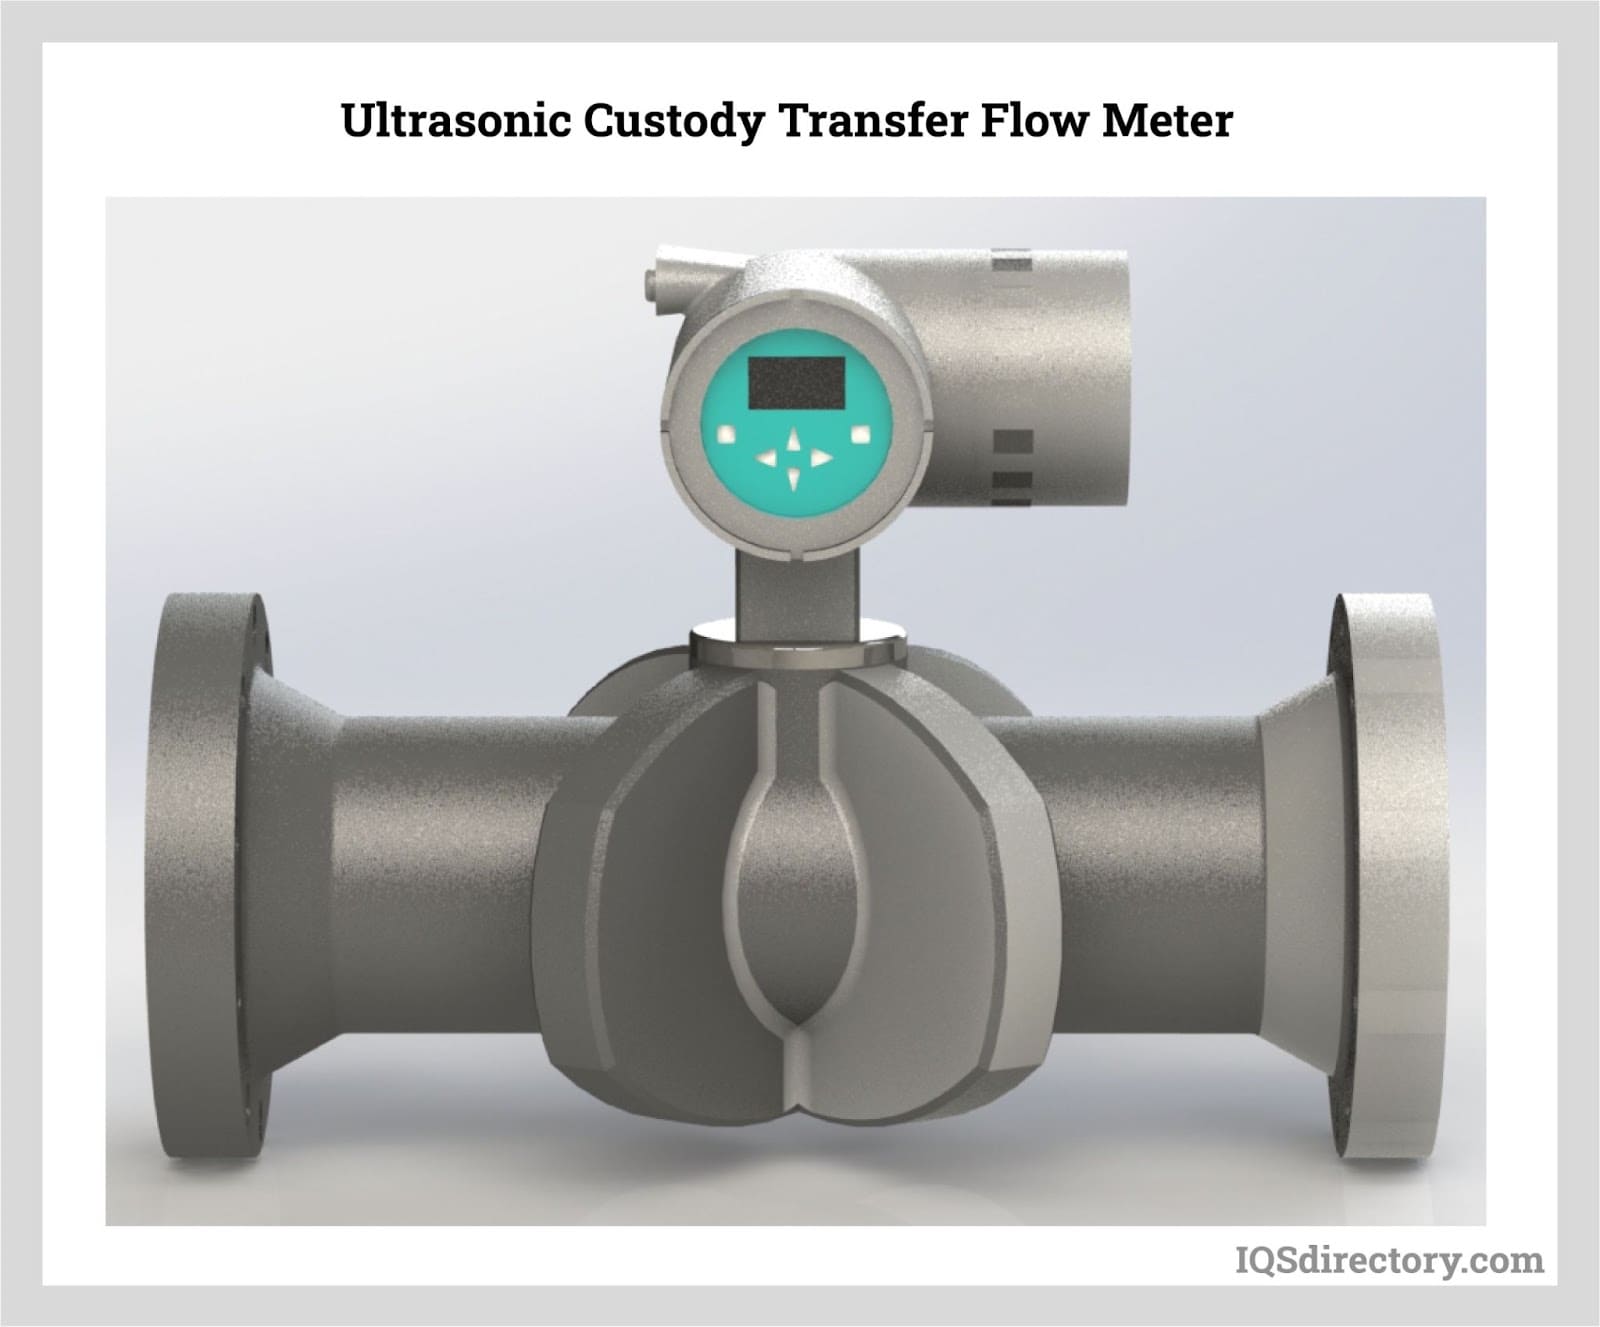 https://www.iqsdirectory.com/articles/flow-meter/ultrasonic-flow-meters/ultrasonic-custody-transfer-flow-meter.jpg